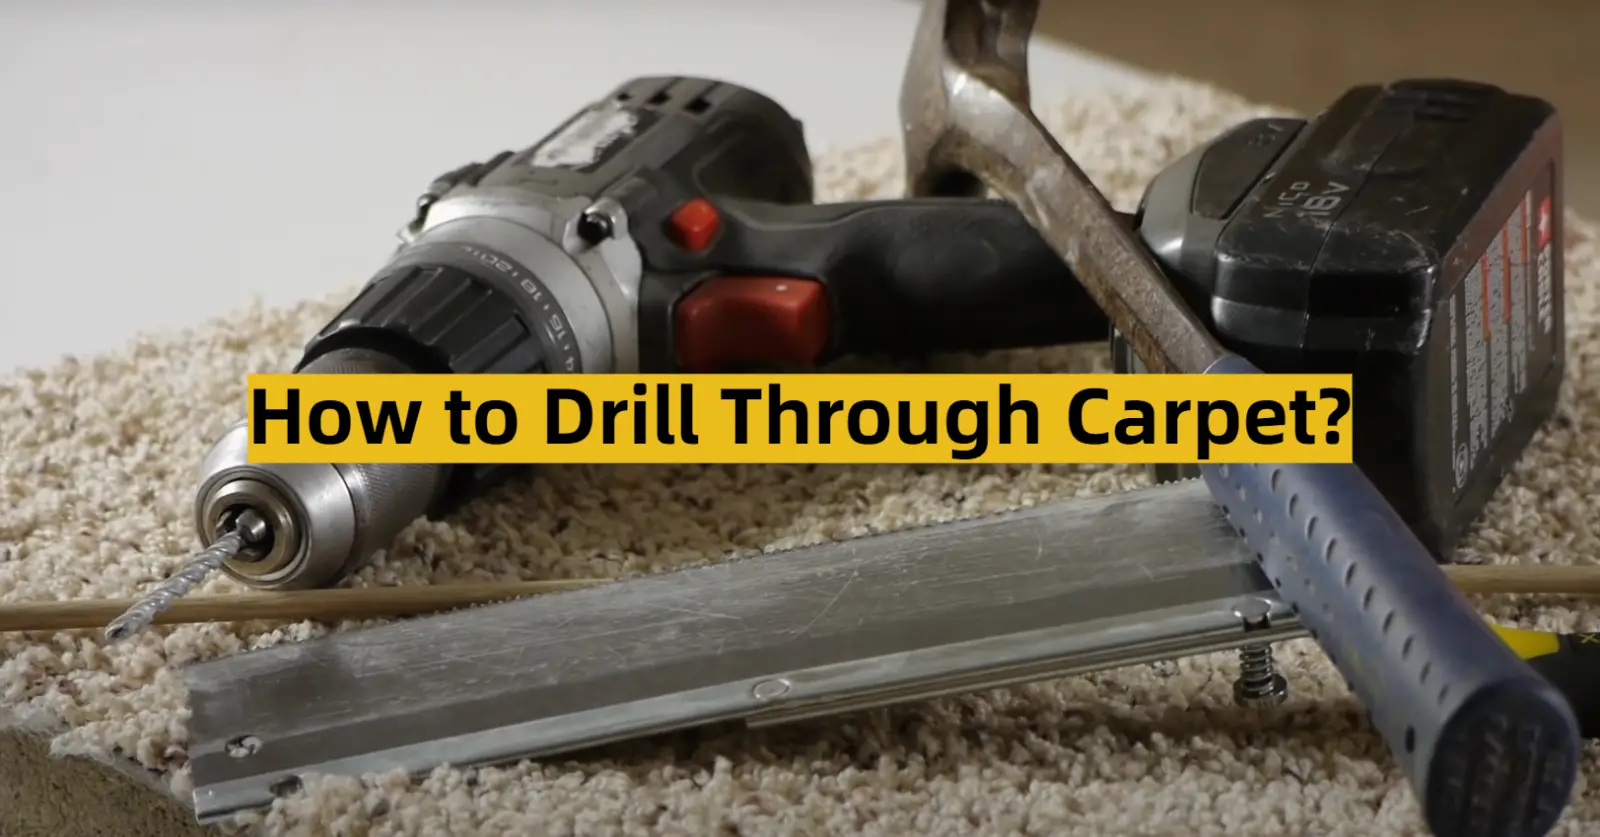 How to Drill Through Carpet?